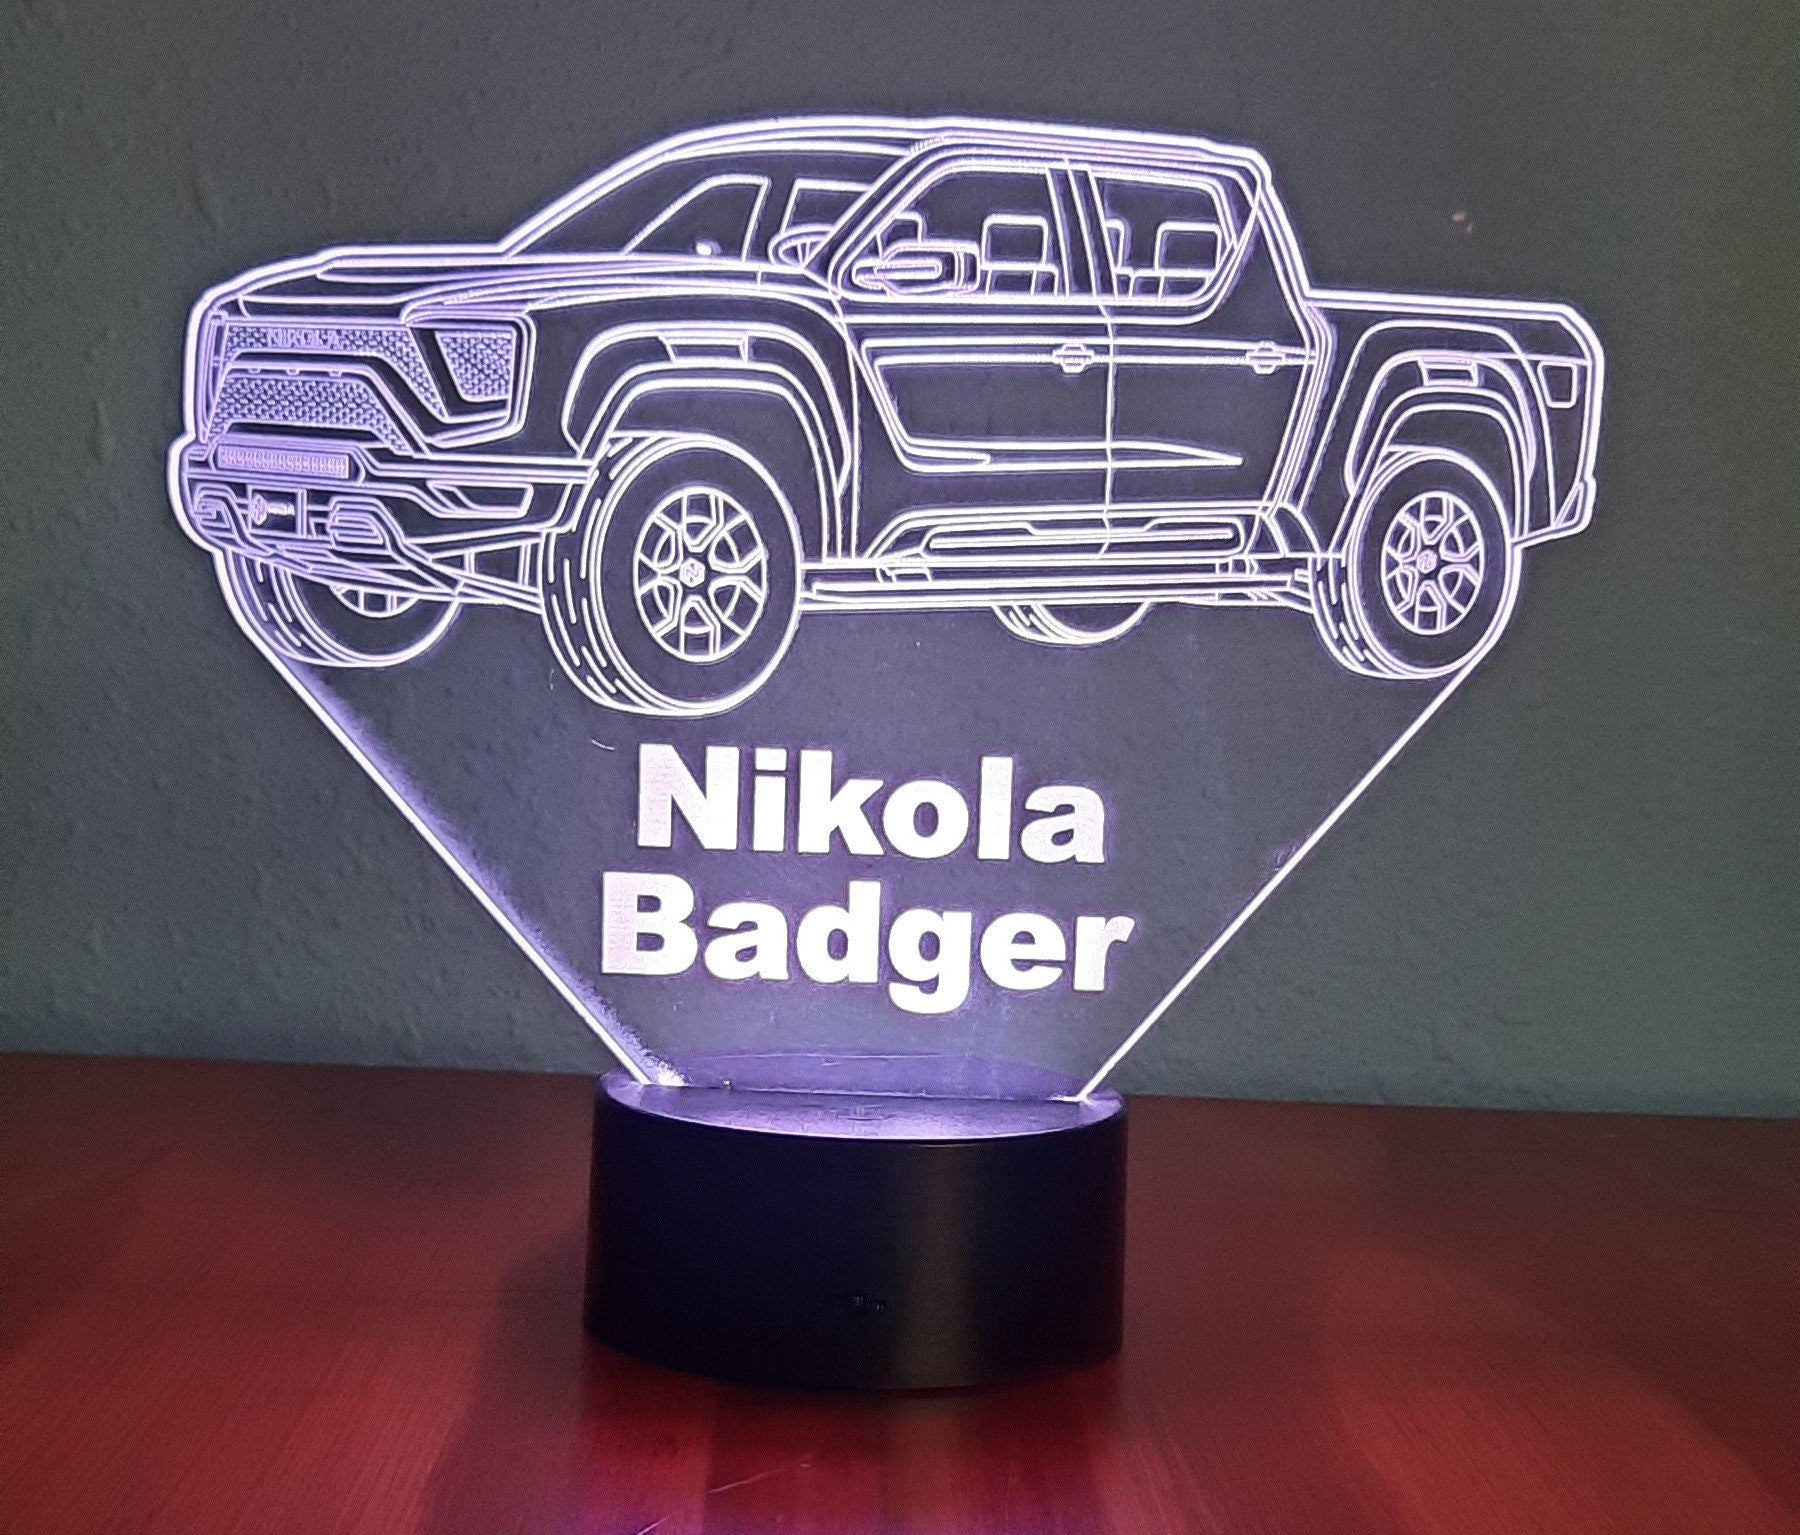 Awesome "Nikola Badger" 3D LED Lamp (1283) - FREE SHIPPING